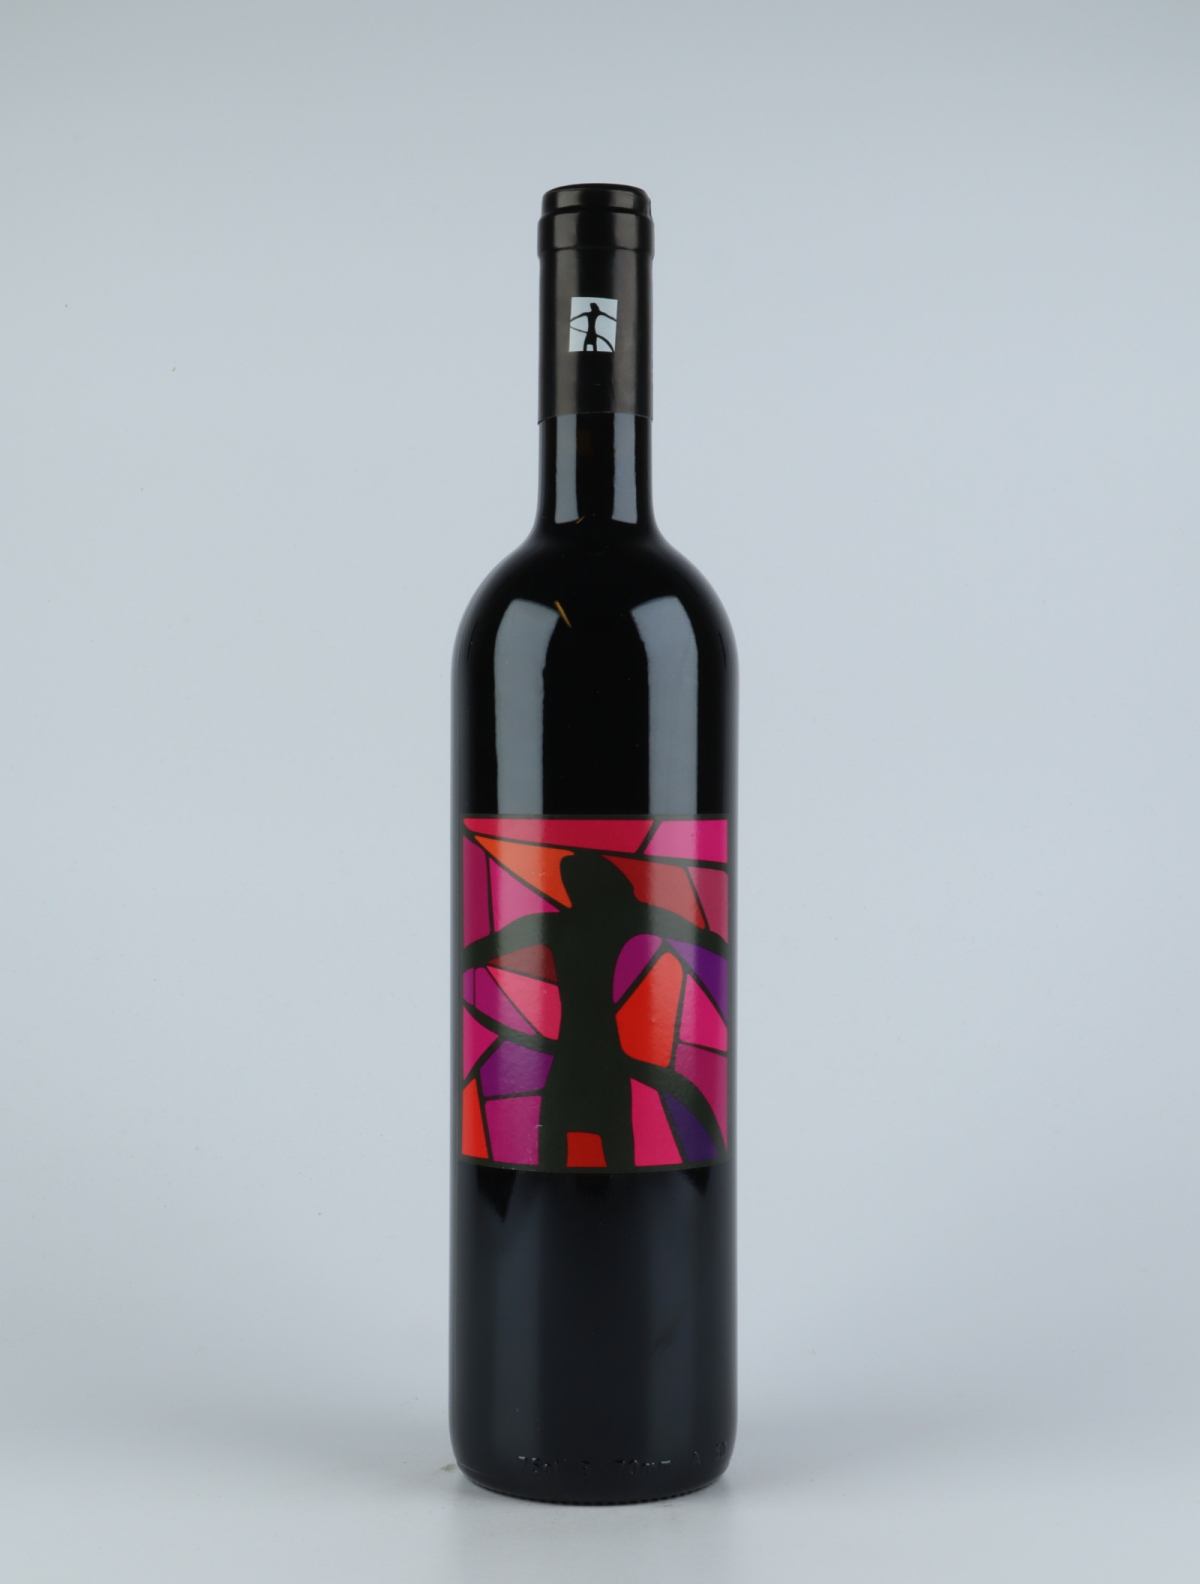 A bottle 2017 Gumbe di Amirai Red wine from Tenuta Selvadolce, Liguria in Italy